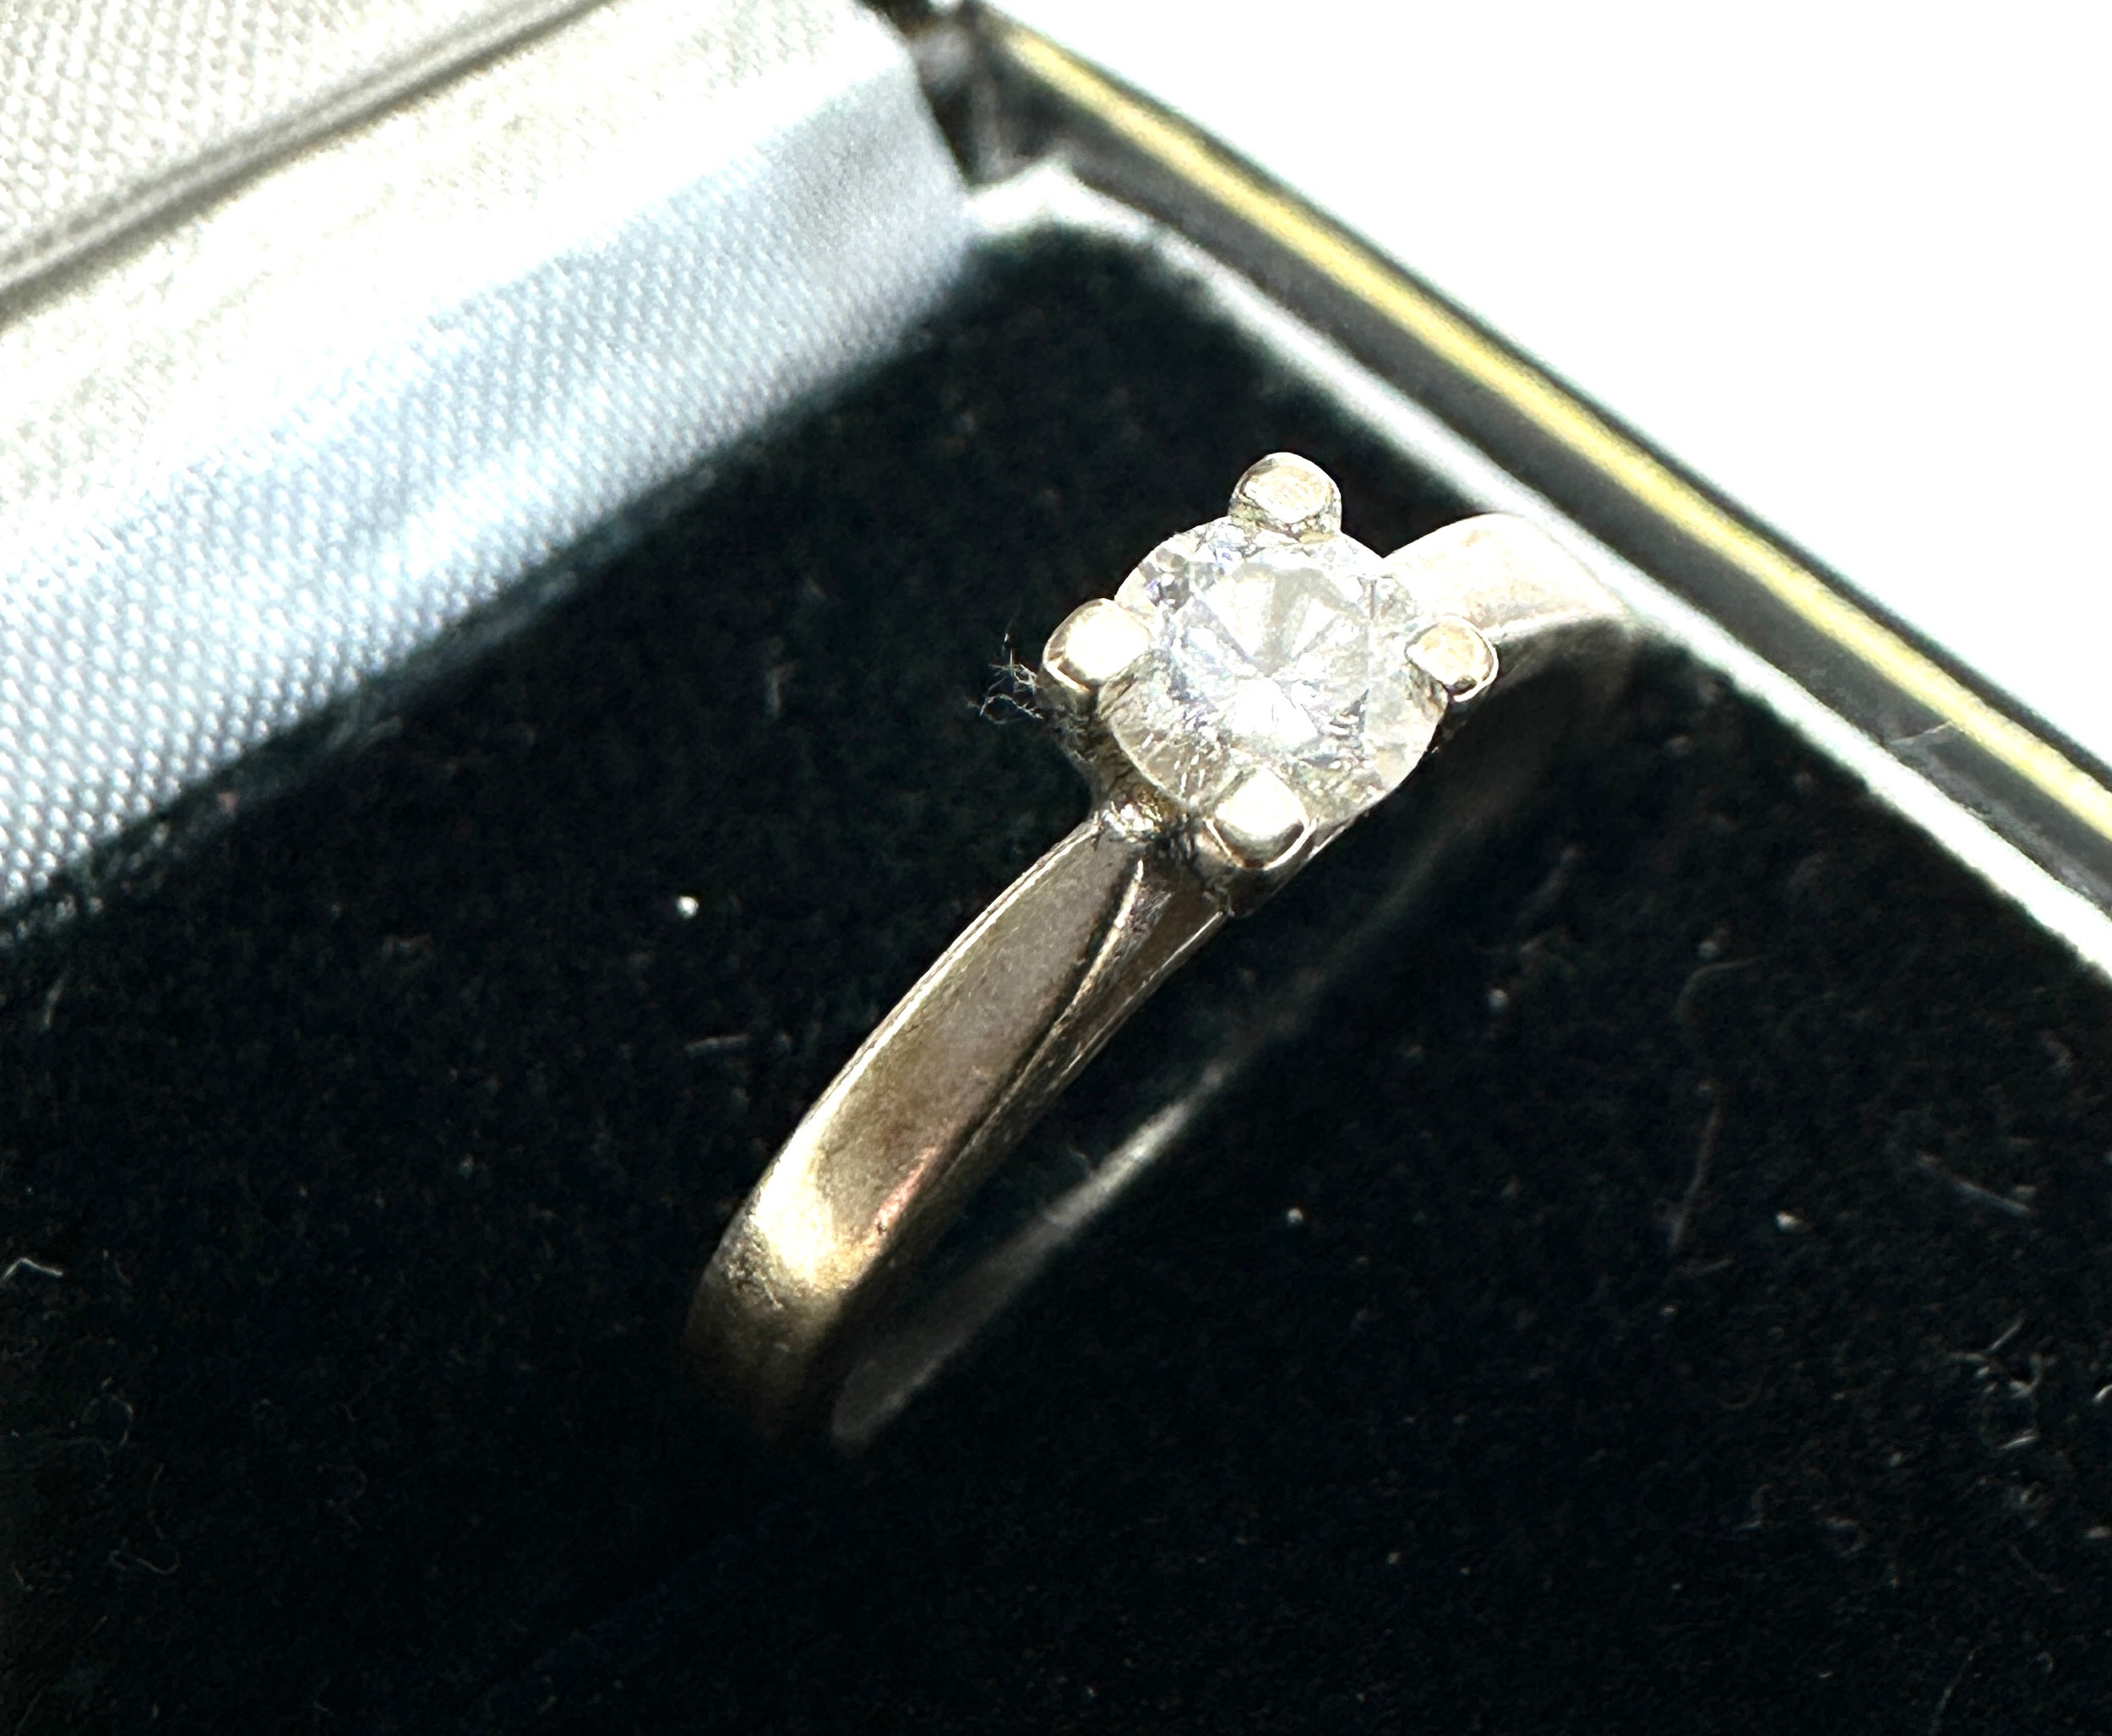 18ct white gold diamond solitaire ring 0.25ct diamond weight 2.8g - Image 2 of 4